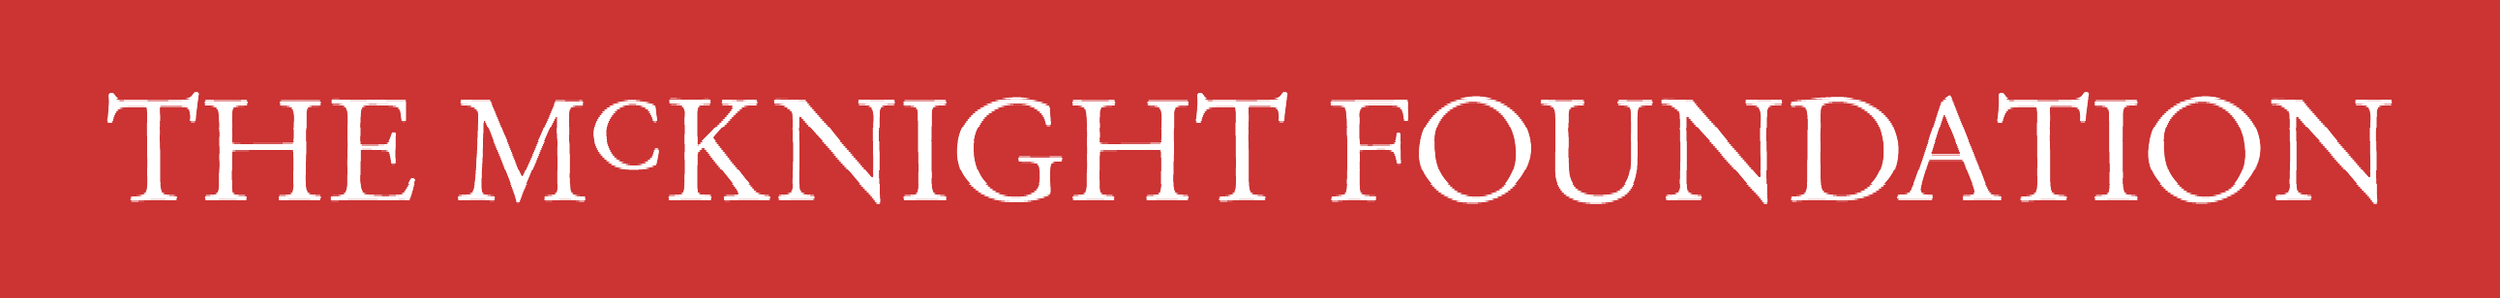 McKnight_Foundation_Logo.png